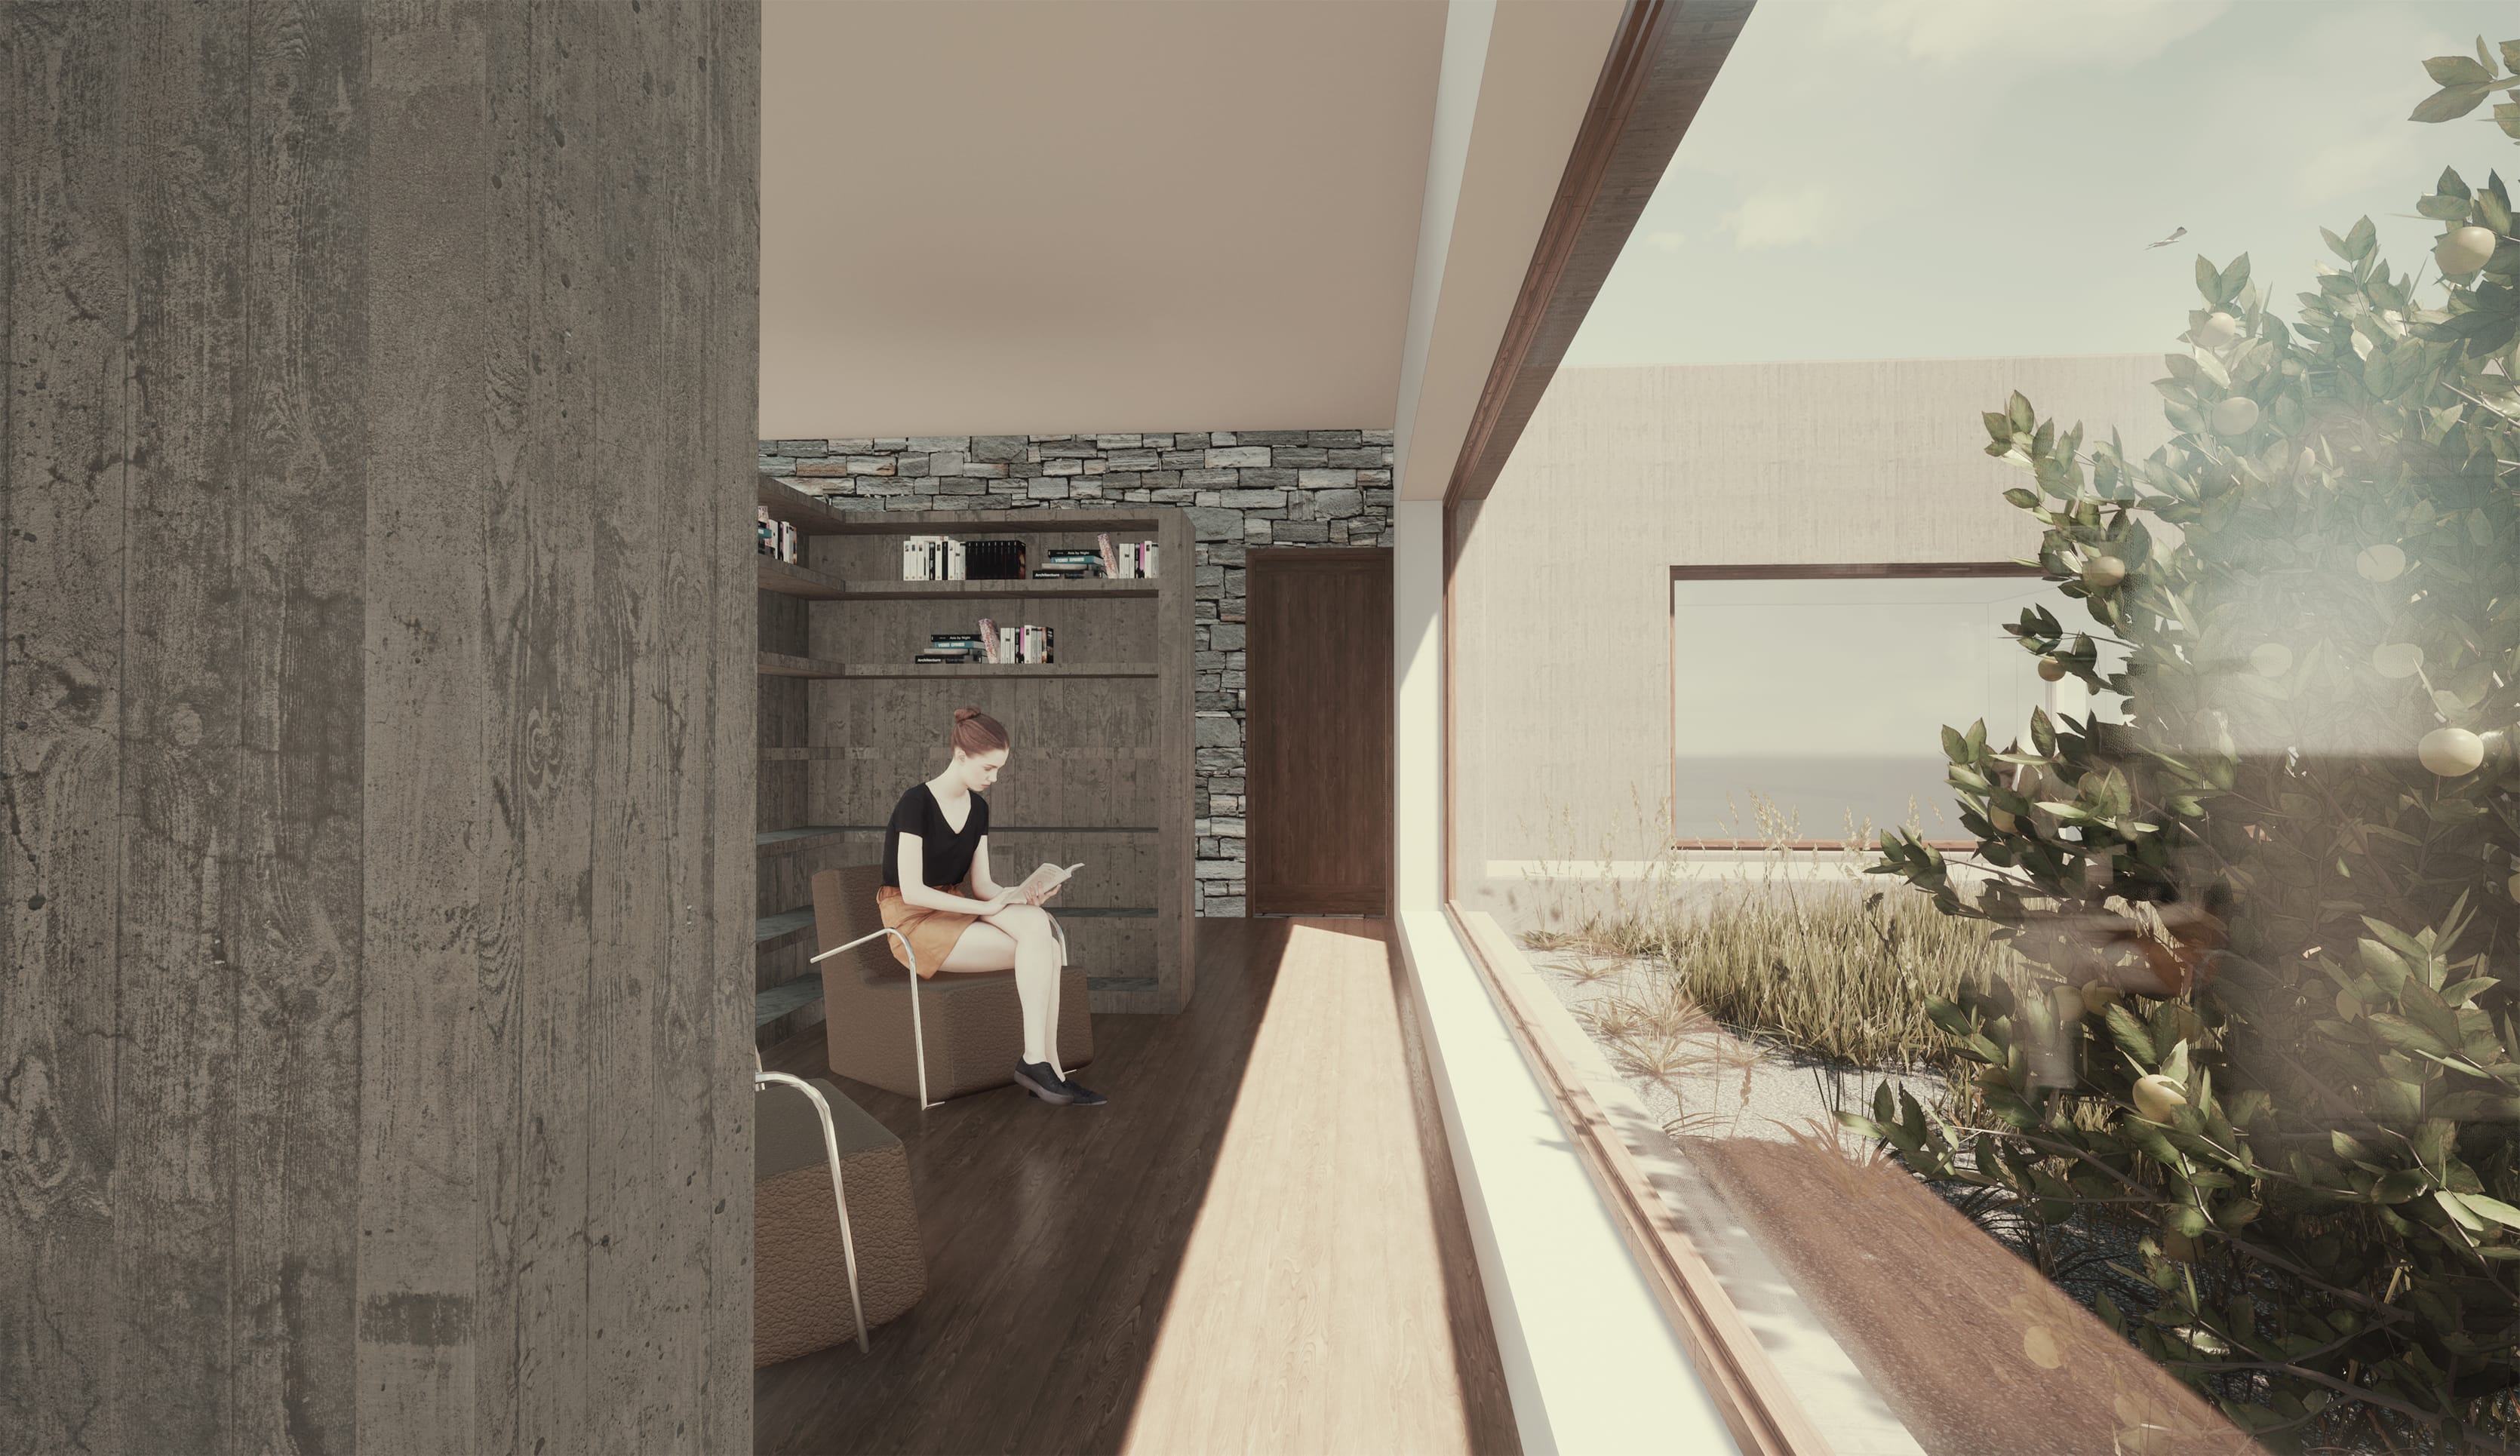 Evripiotis Architects--Music Garden House, Paros Island